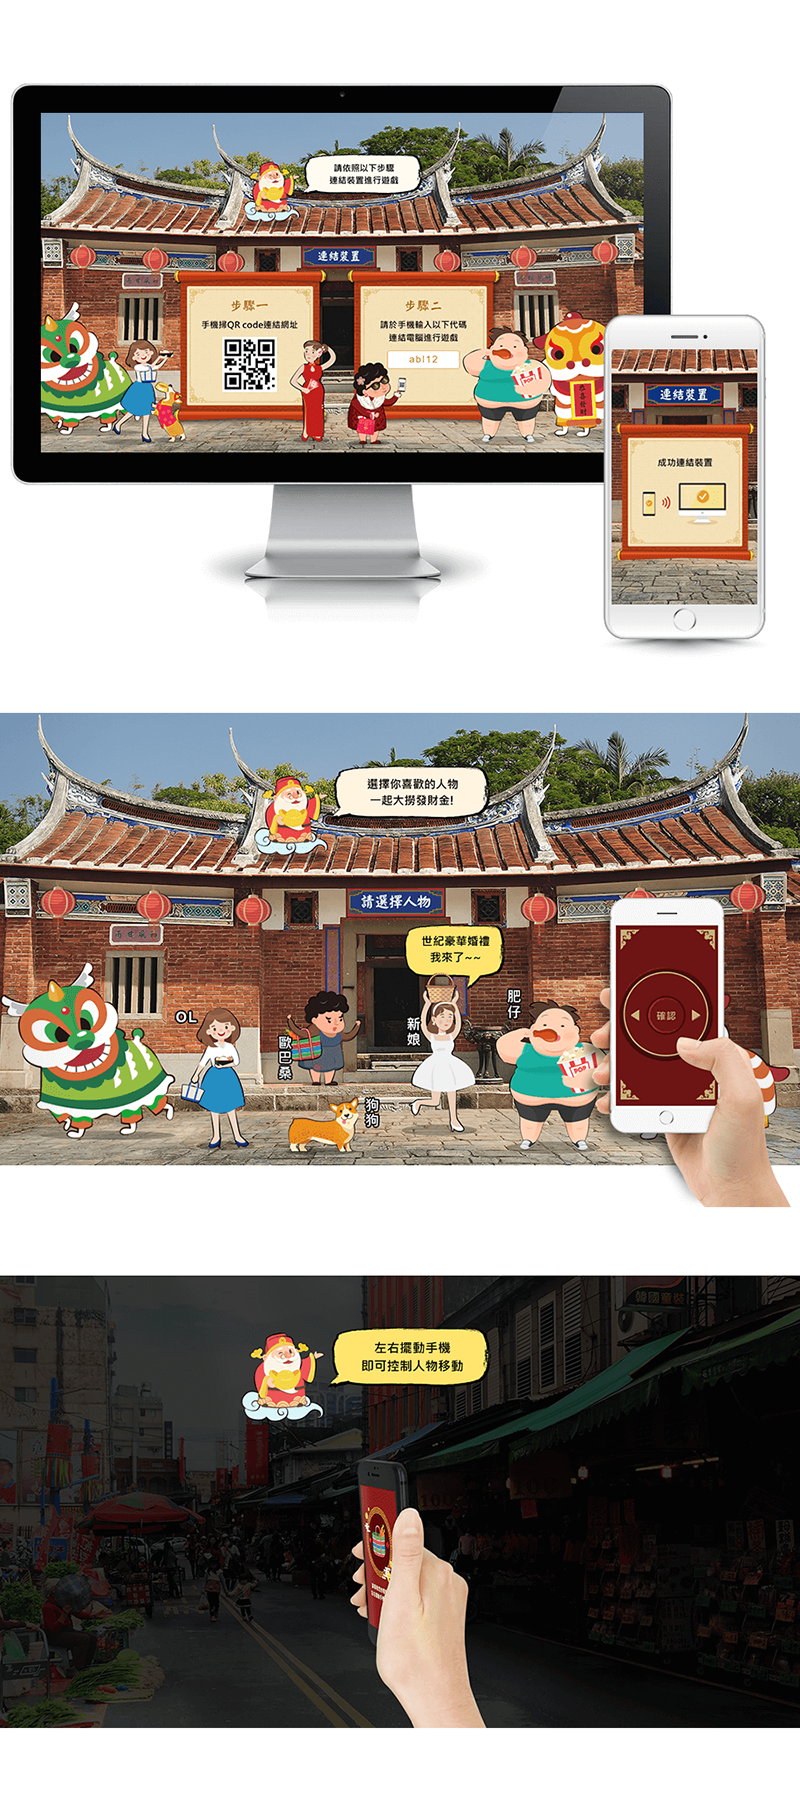 SOBO創意設計 X 新娘物語 新年活動網站 網頁互動遊戲